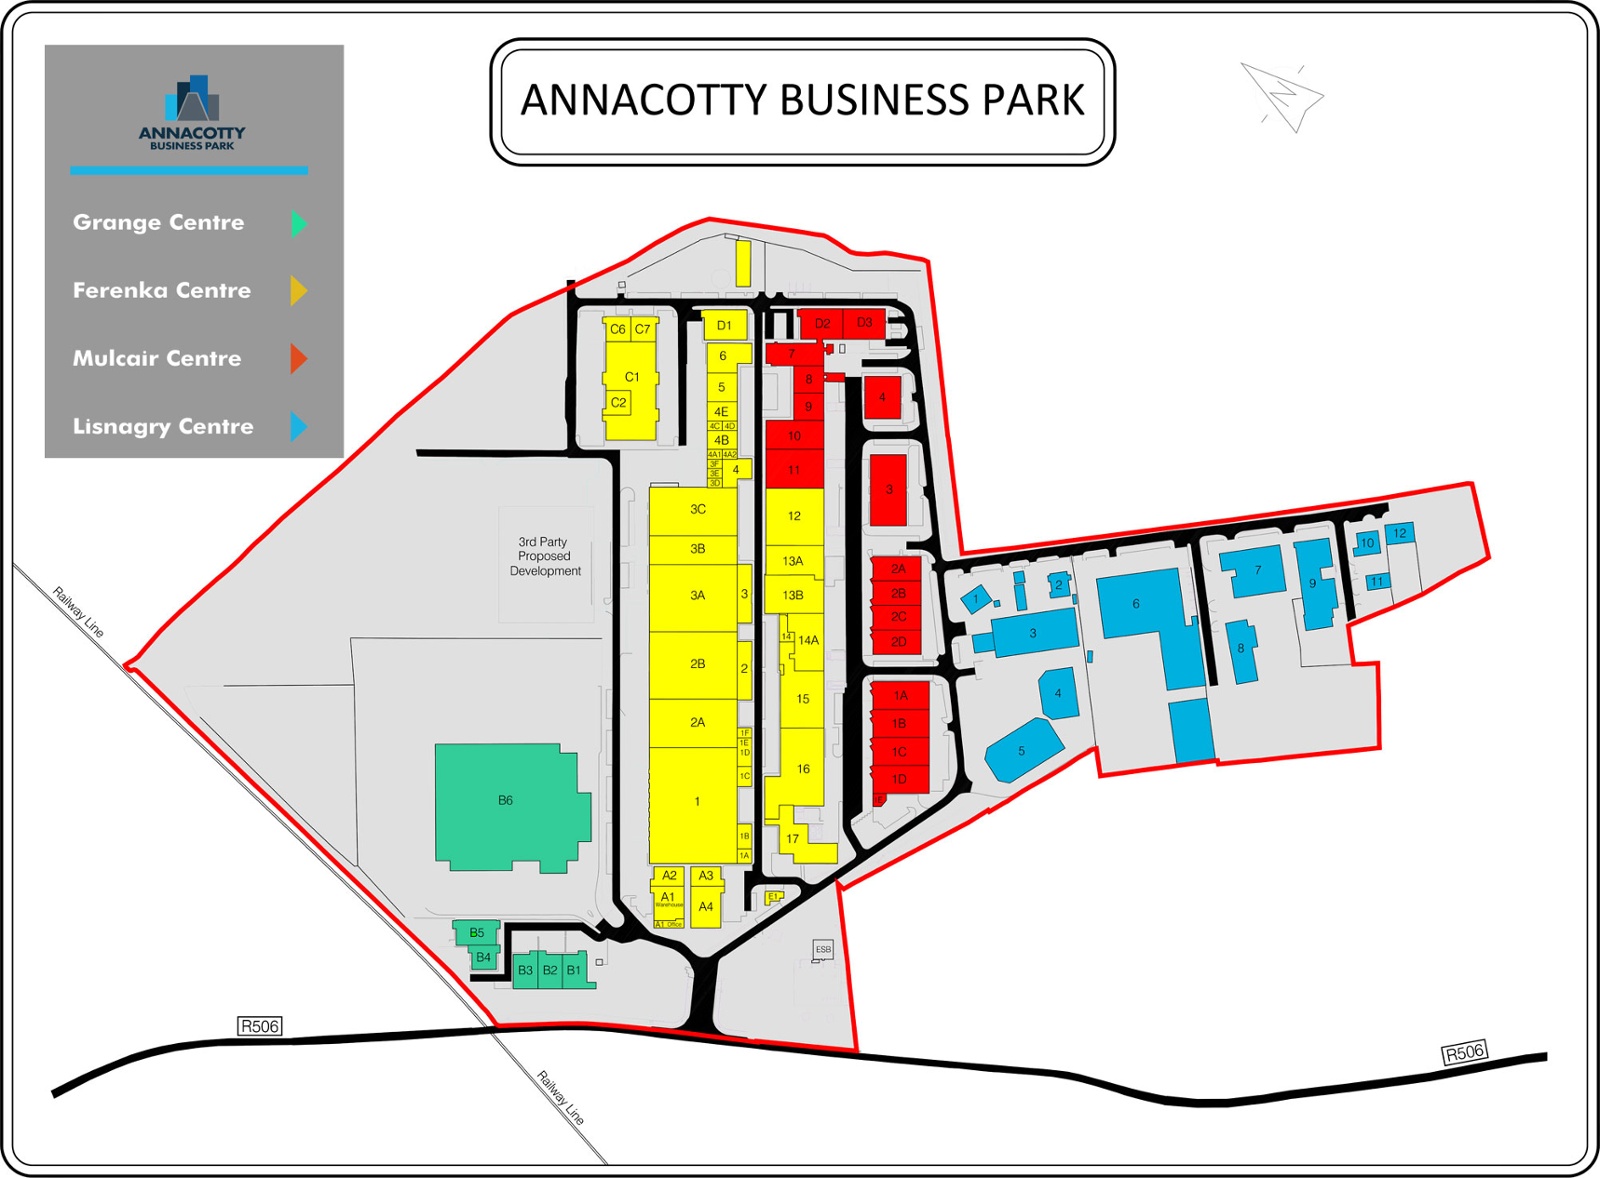 Annacotty Business Park